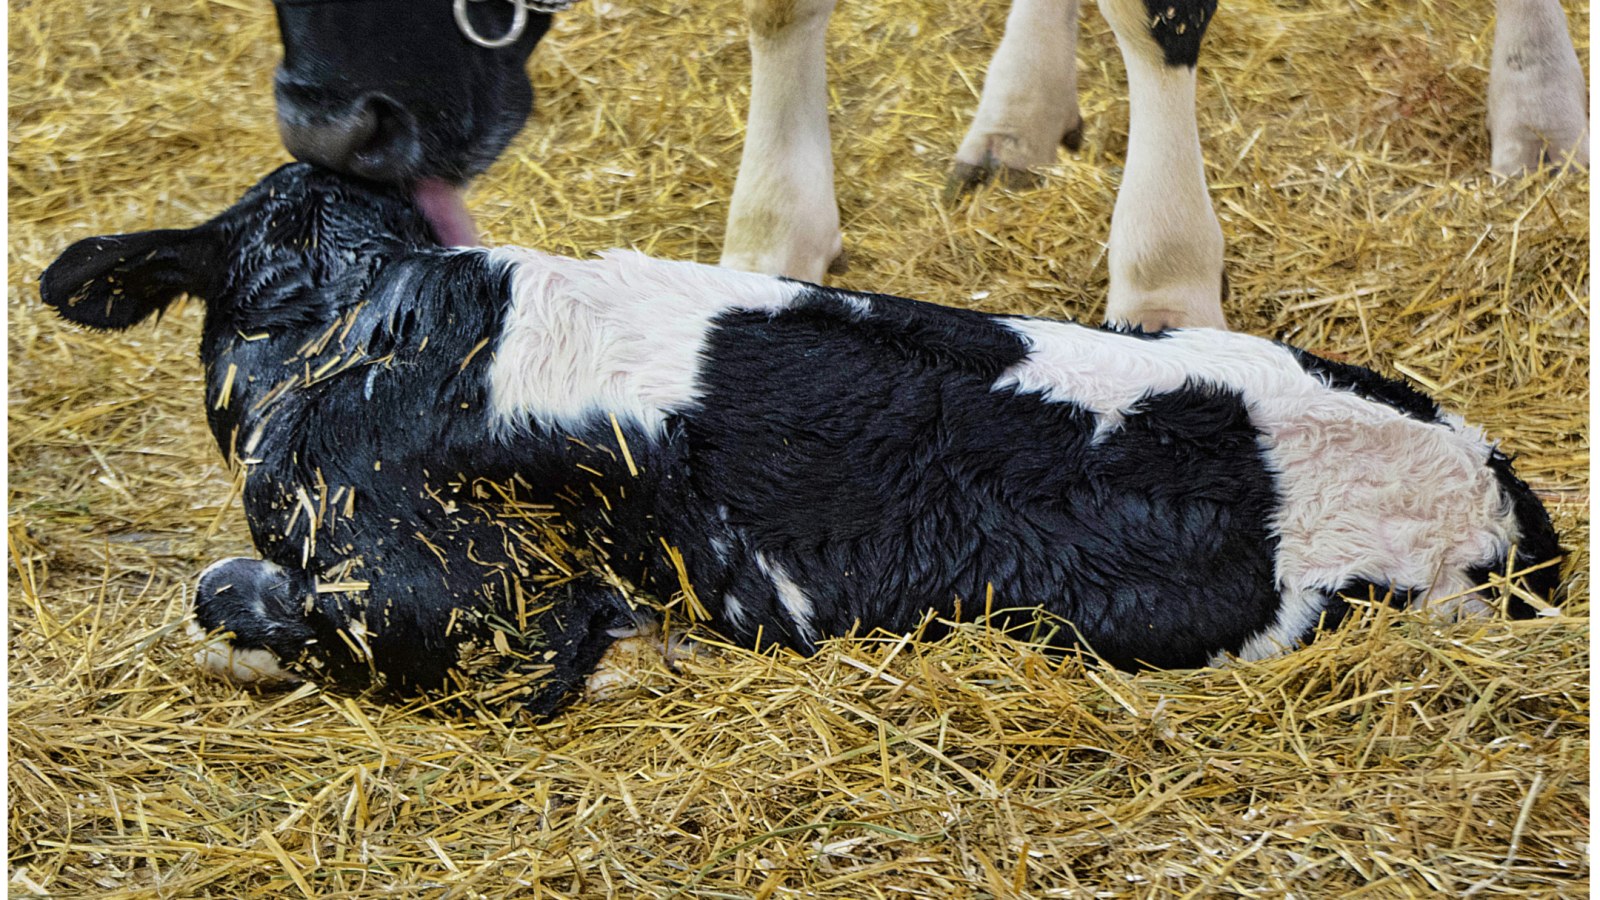 Rare Two-Headed Calf Born at Farm Stuns Internet